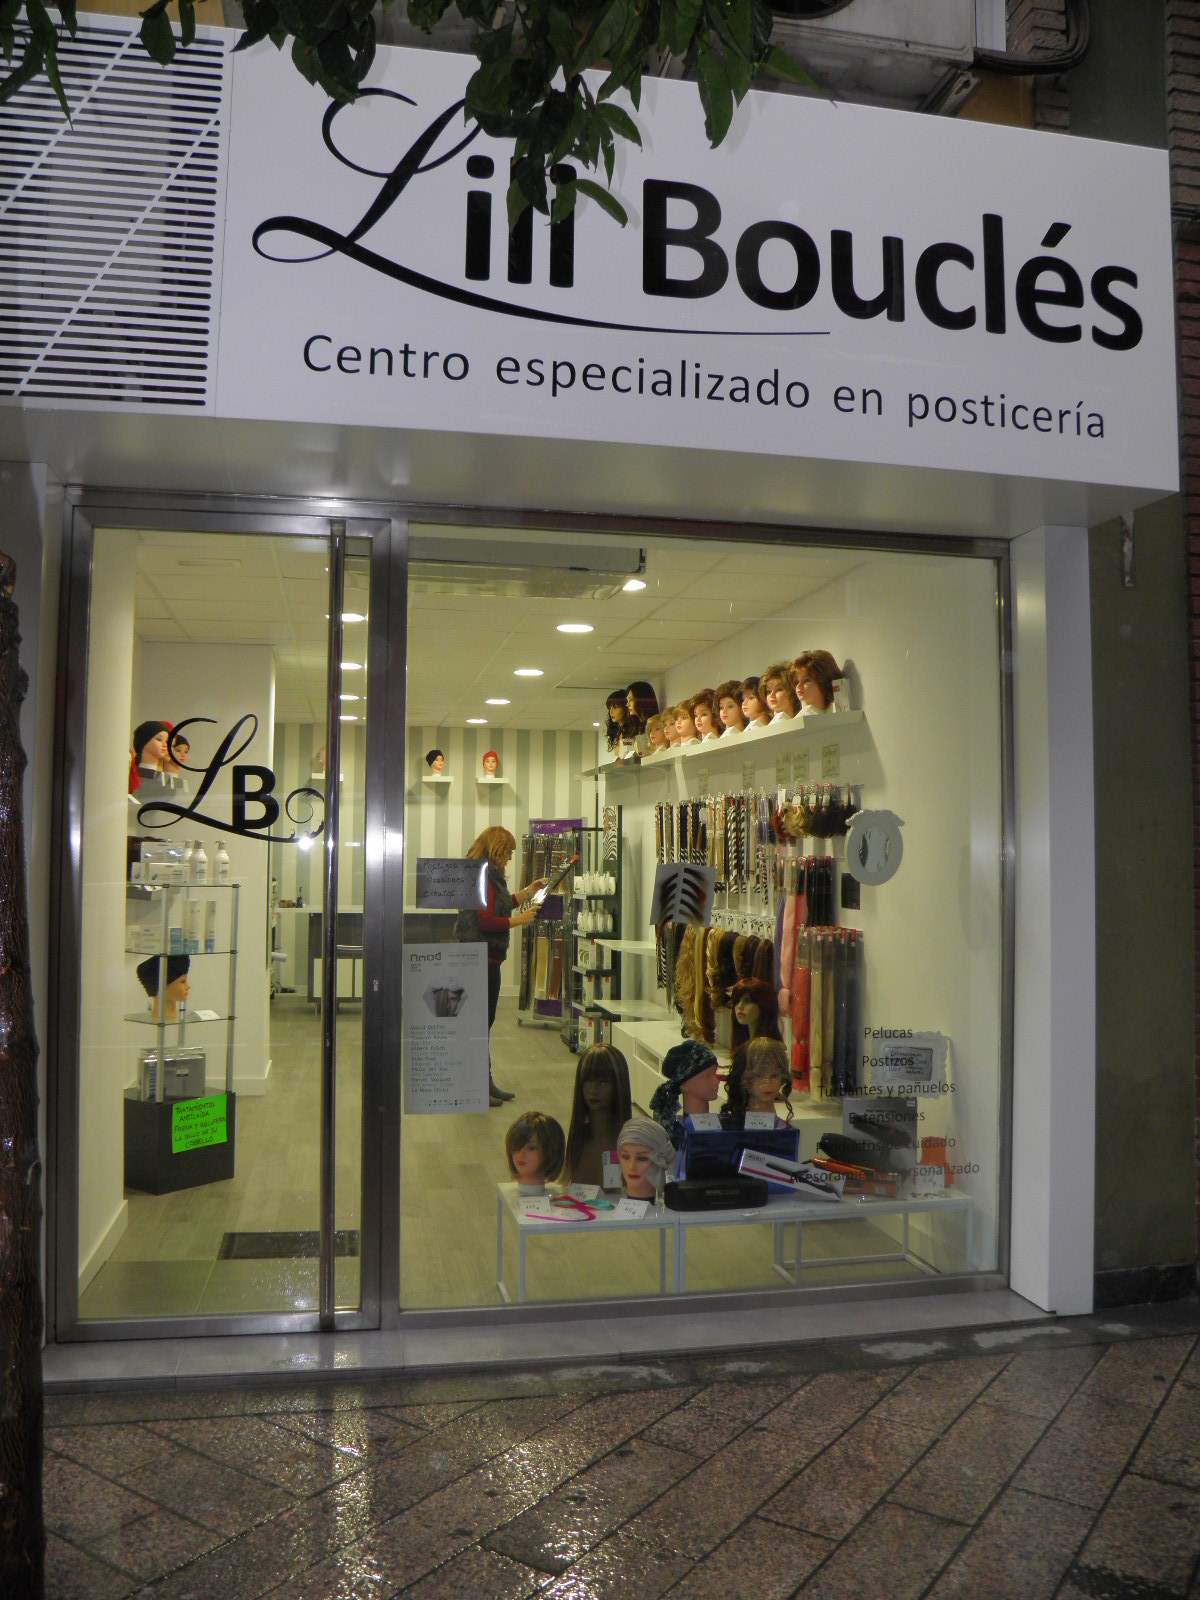 Lili Bouclés entrada tienda